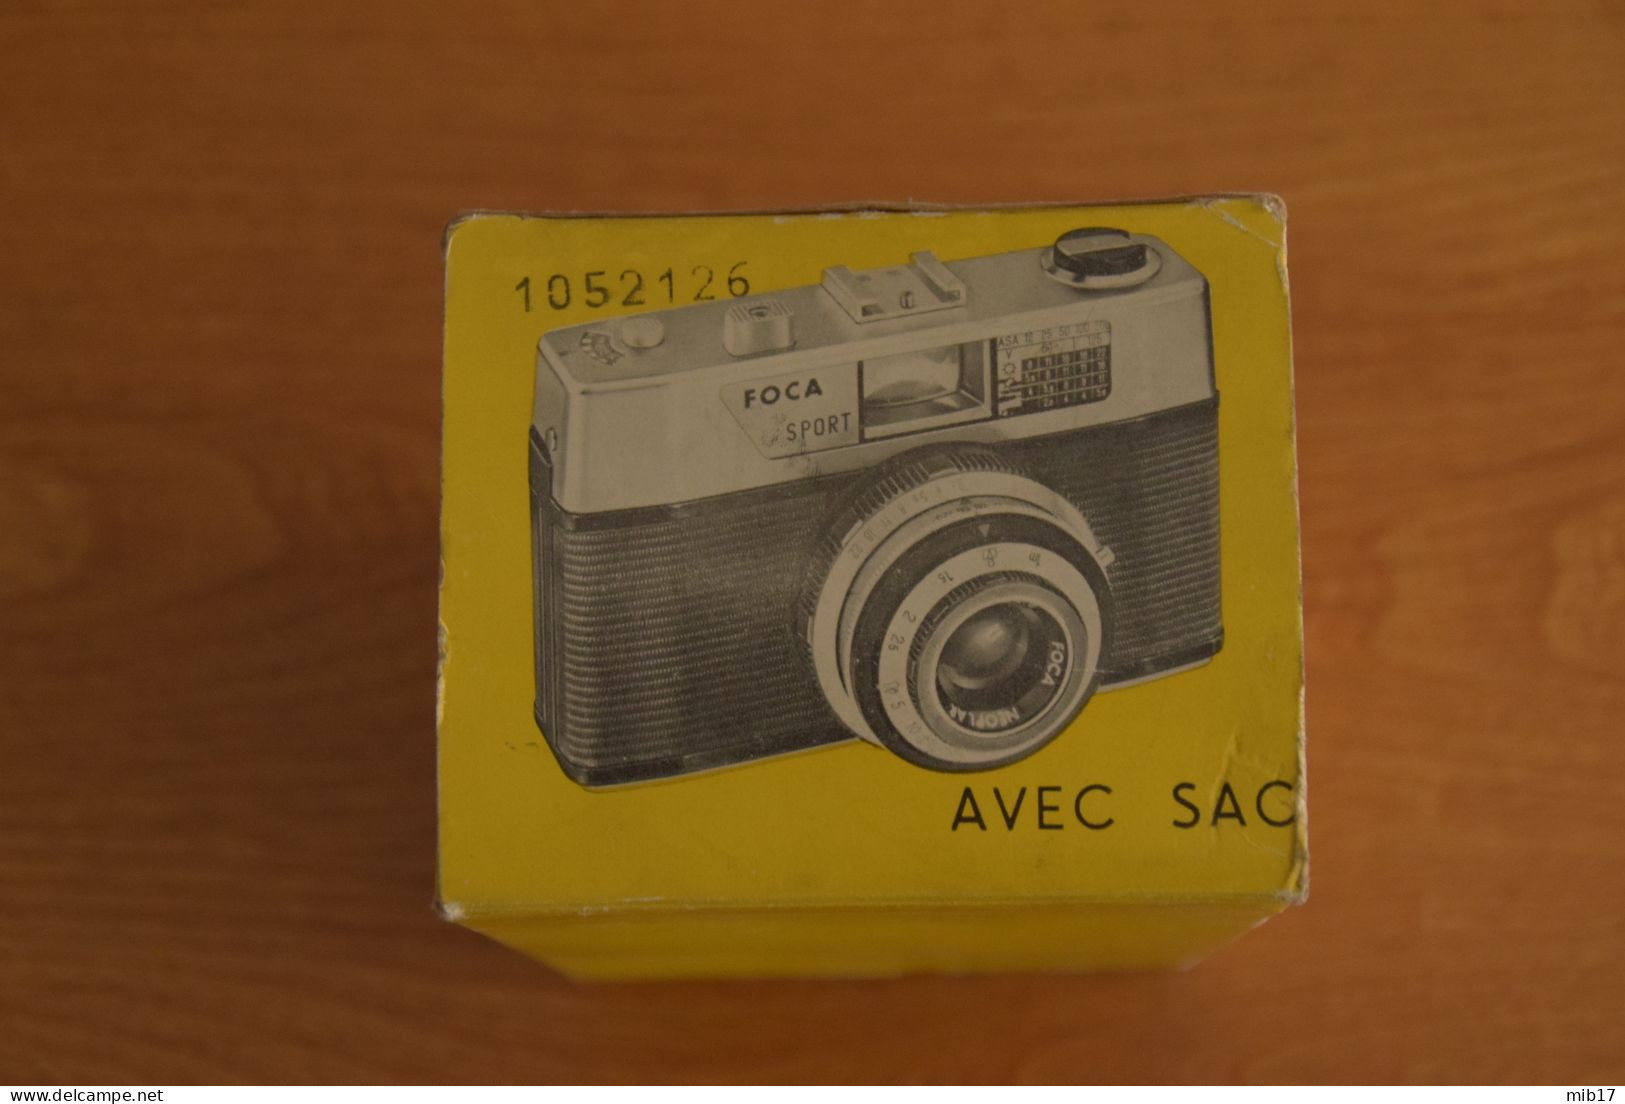 ancien appareil photo FOCA FOCASPORT avec boite,sac et mode d'emploi film 135 24x36